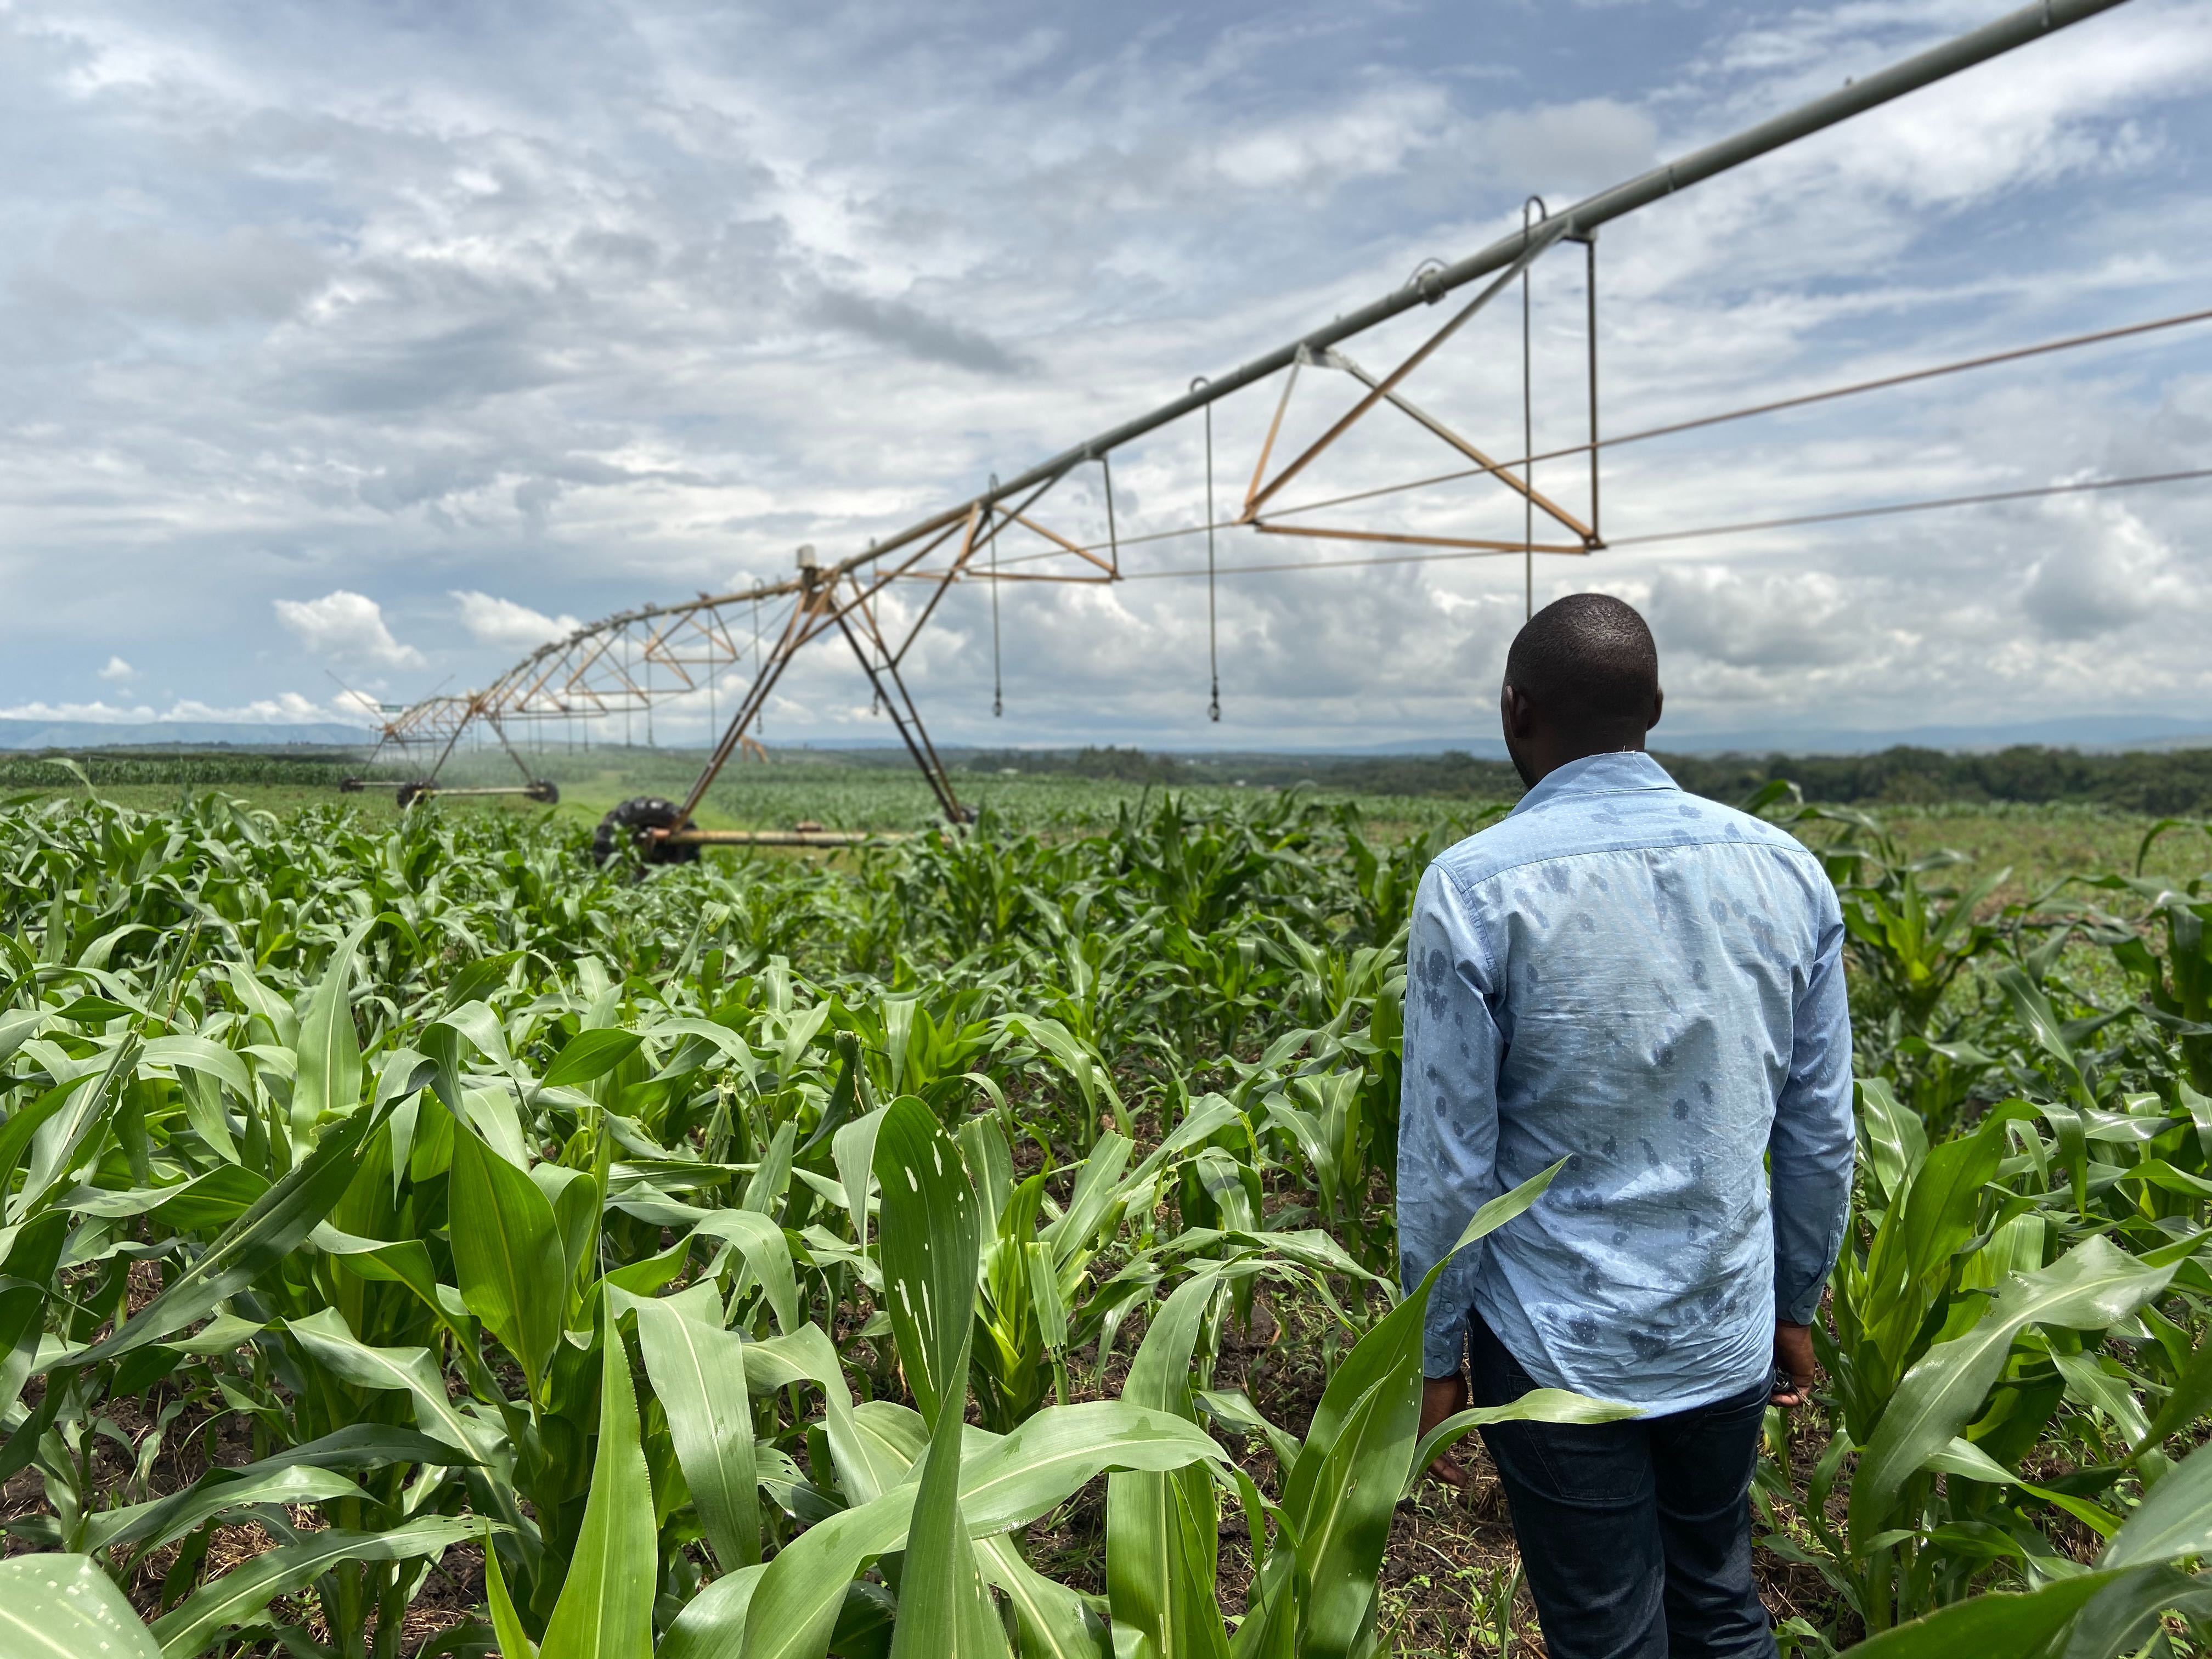 Rwanda Agriculture